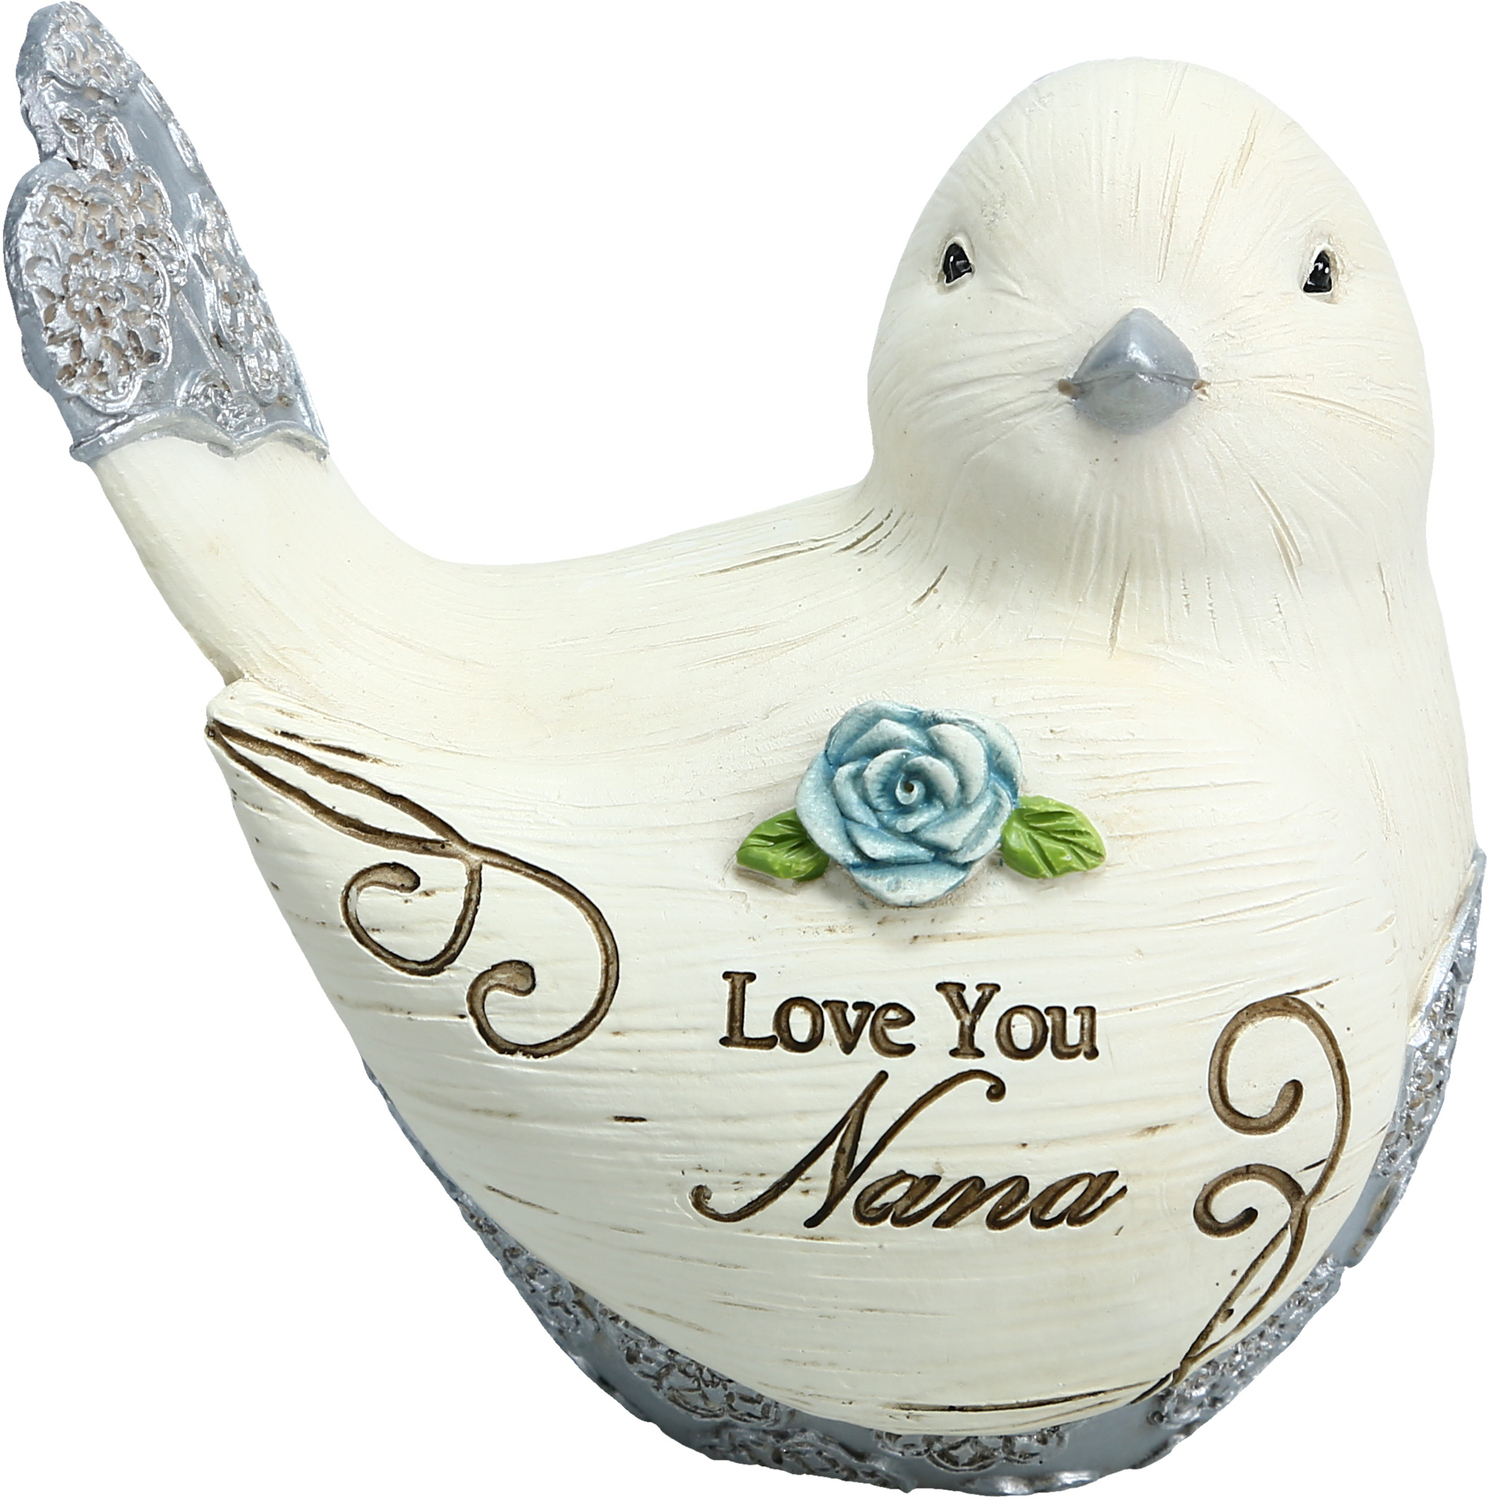 Nana by Elements - Nana - 3.5" Bird Figurine